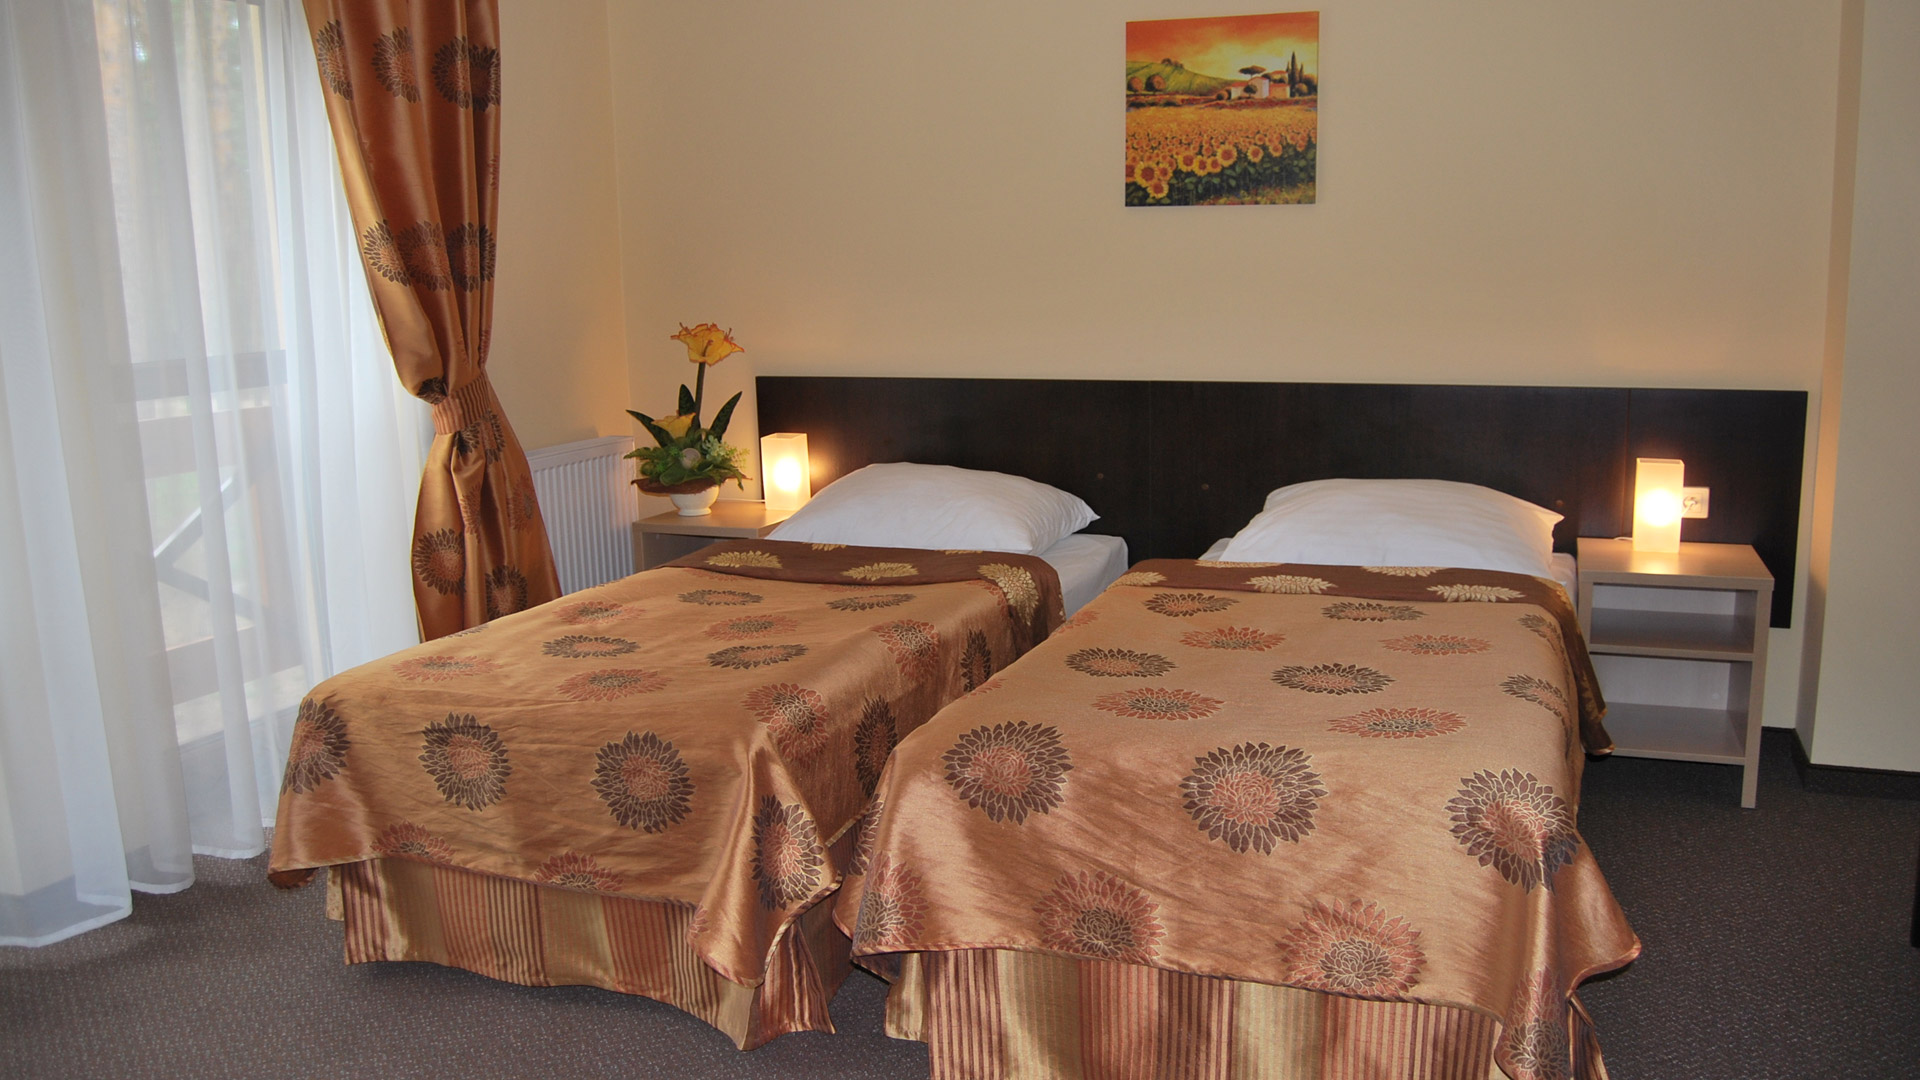 Sielpia hotel rooms suites resort restaurant in Kielce Poland